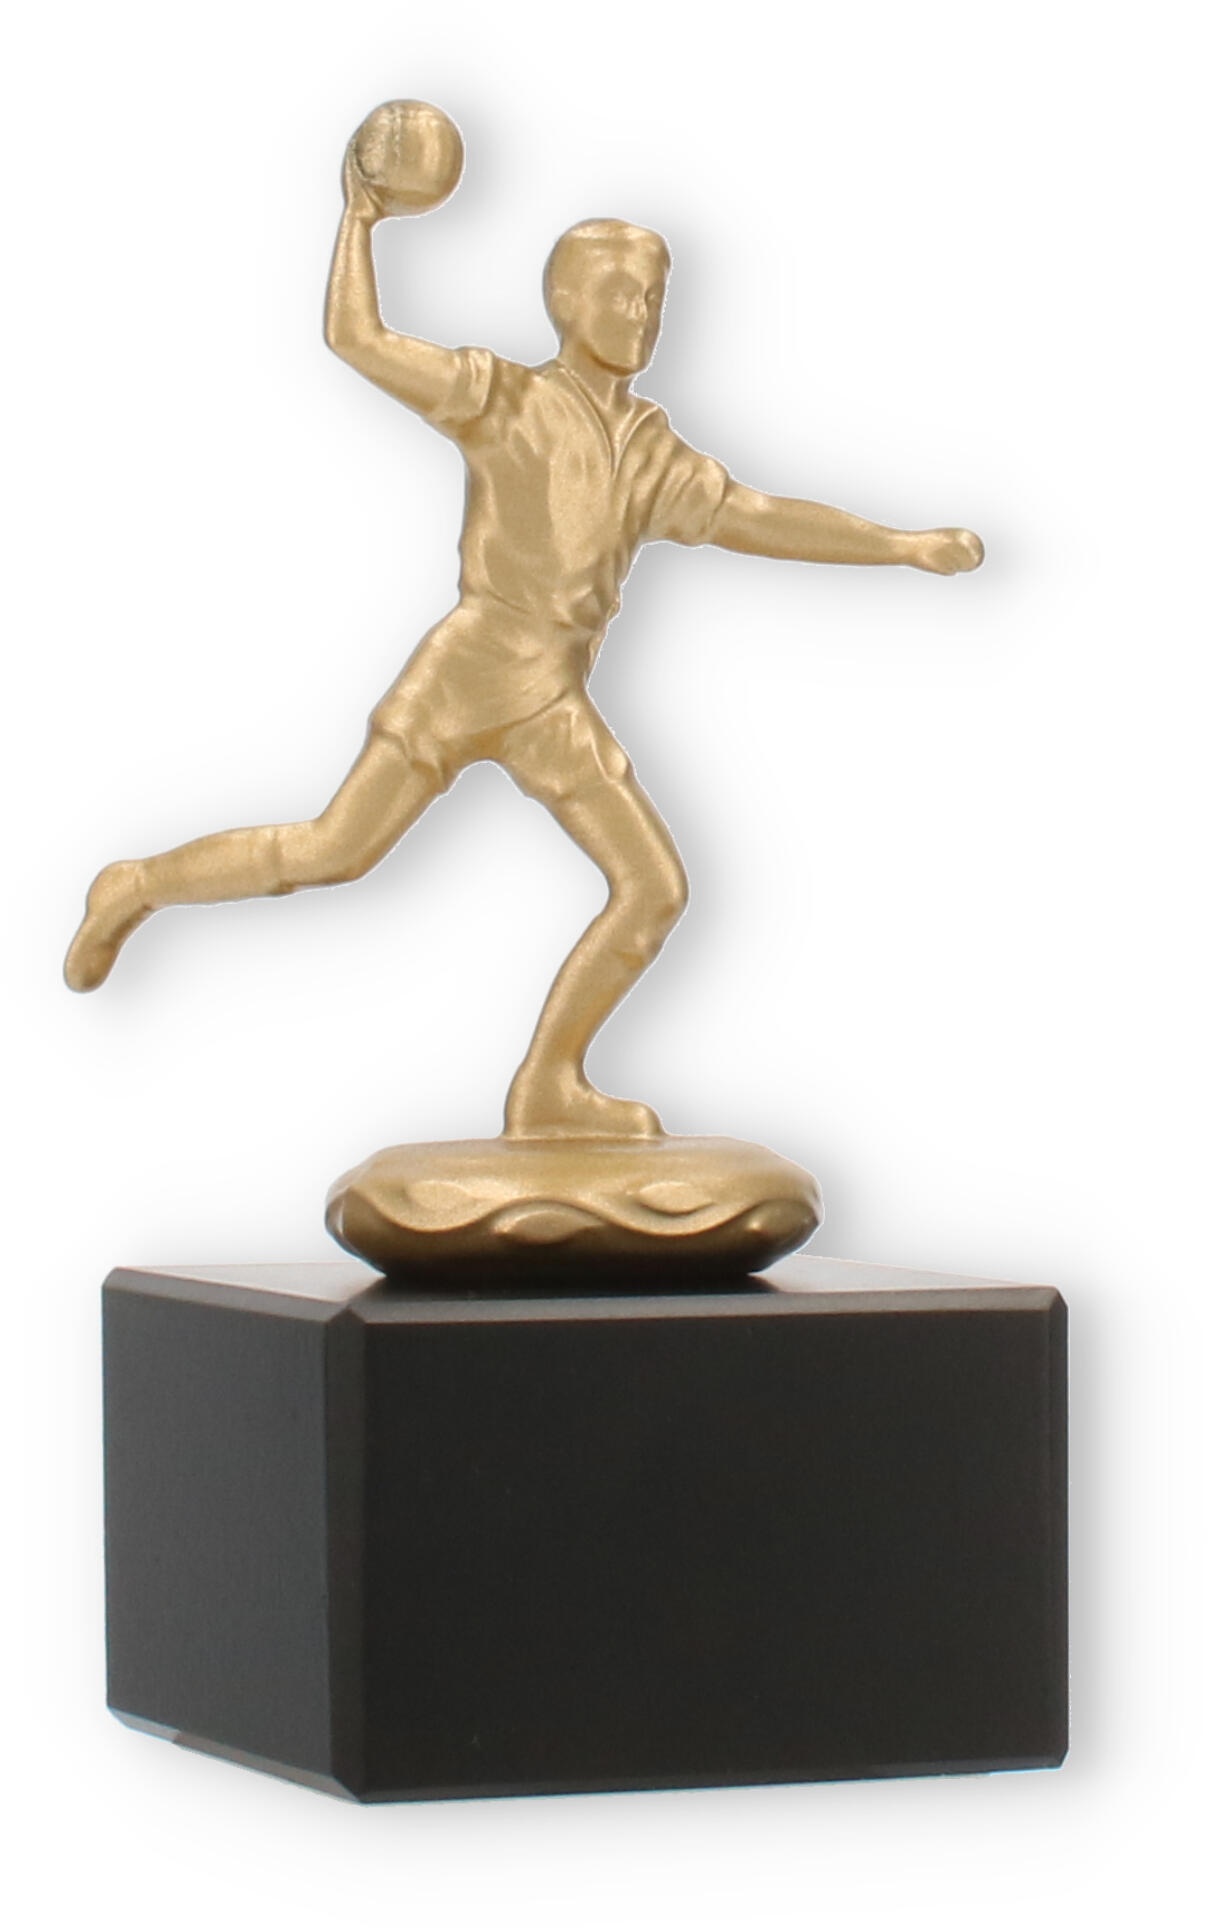 Pokal Metallfigur Handballspieler goldmetallic auf schwarzem Marmorsockel 13,0cm